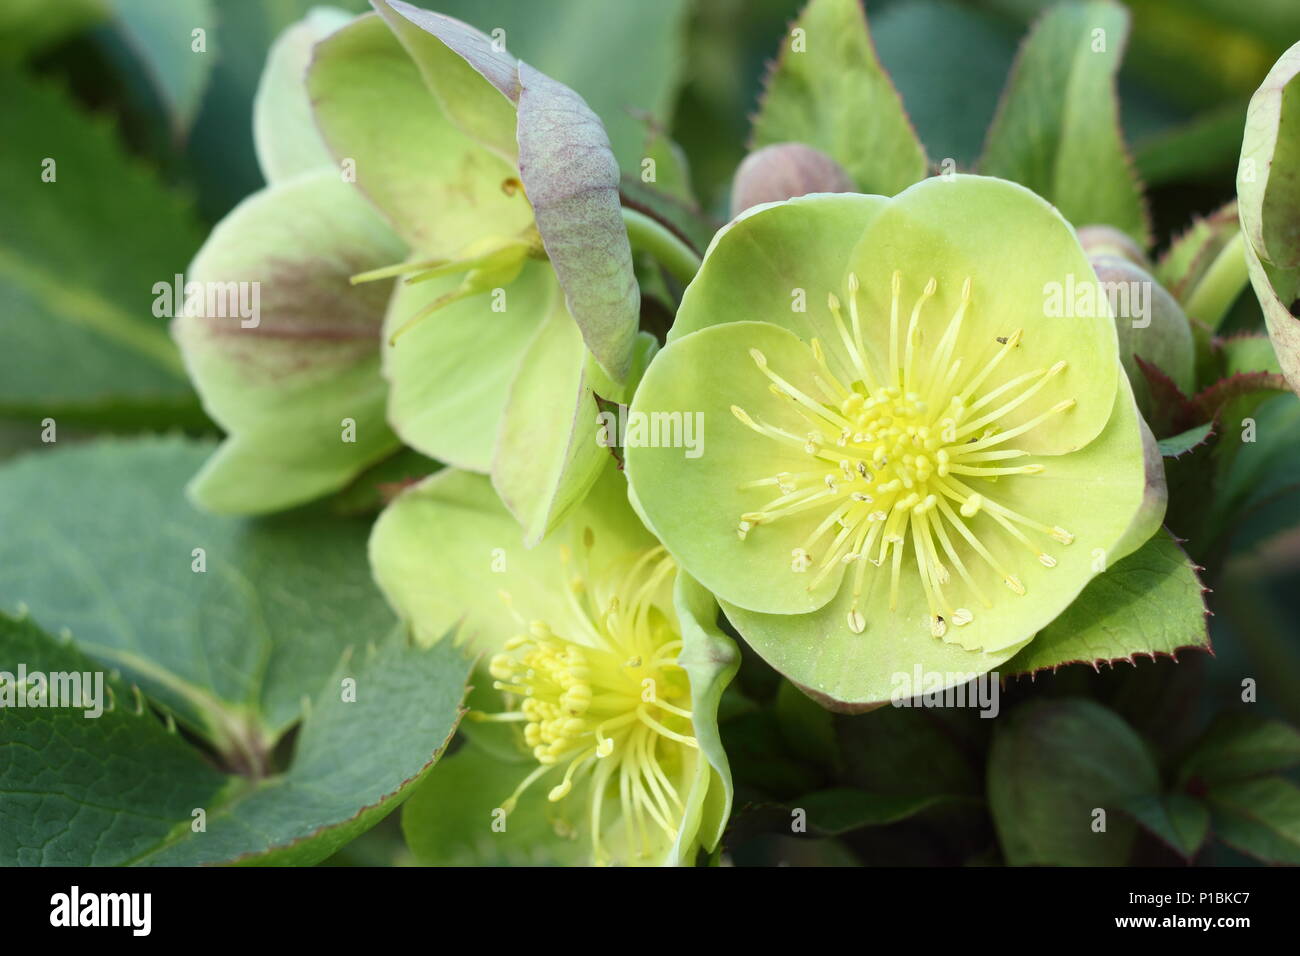 Helleborus × sternii, also called Stern's hybrid hellebore, in flower in an English winter garden, UK Stock Photo